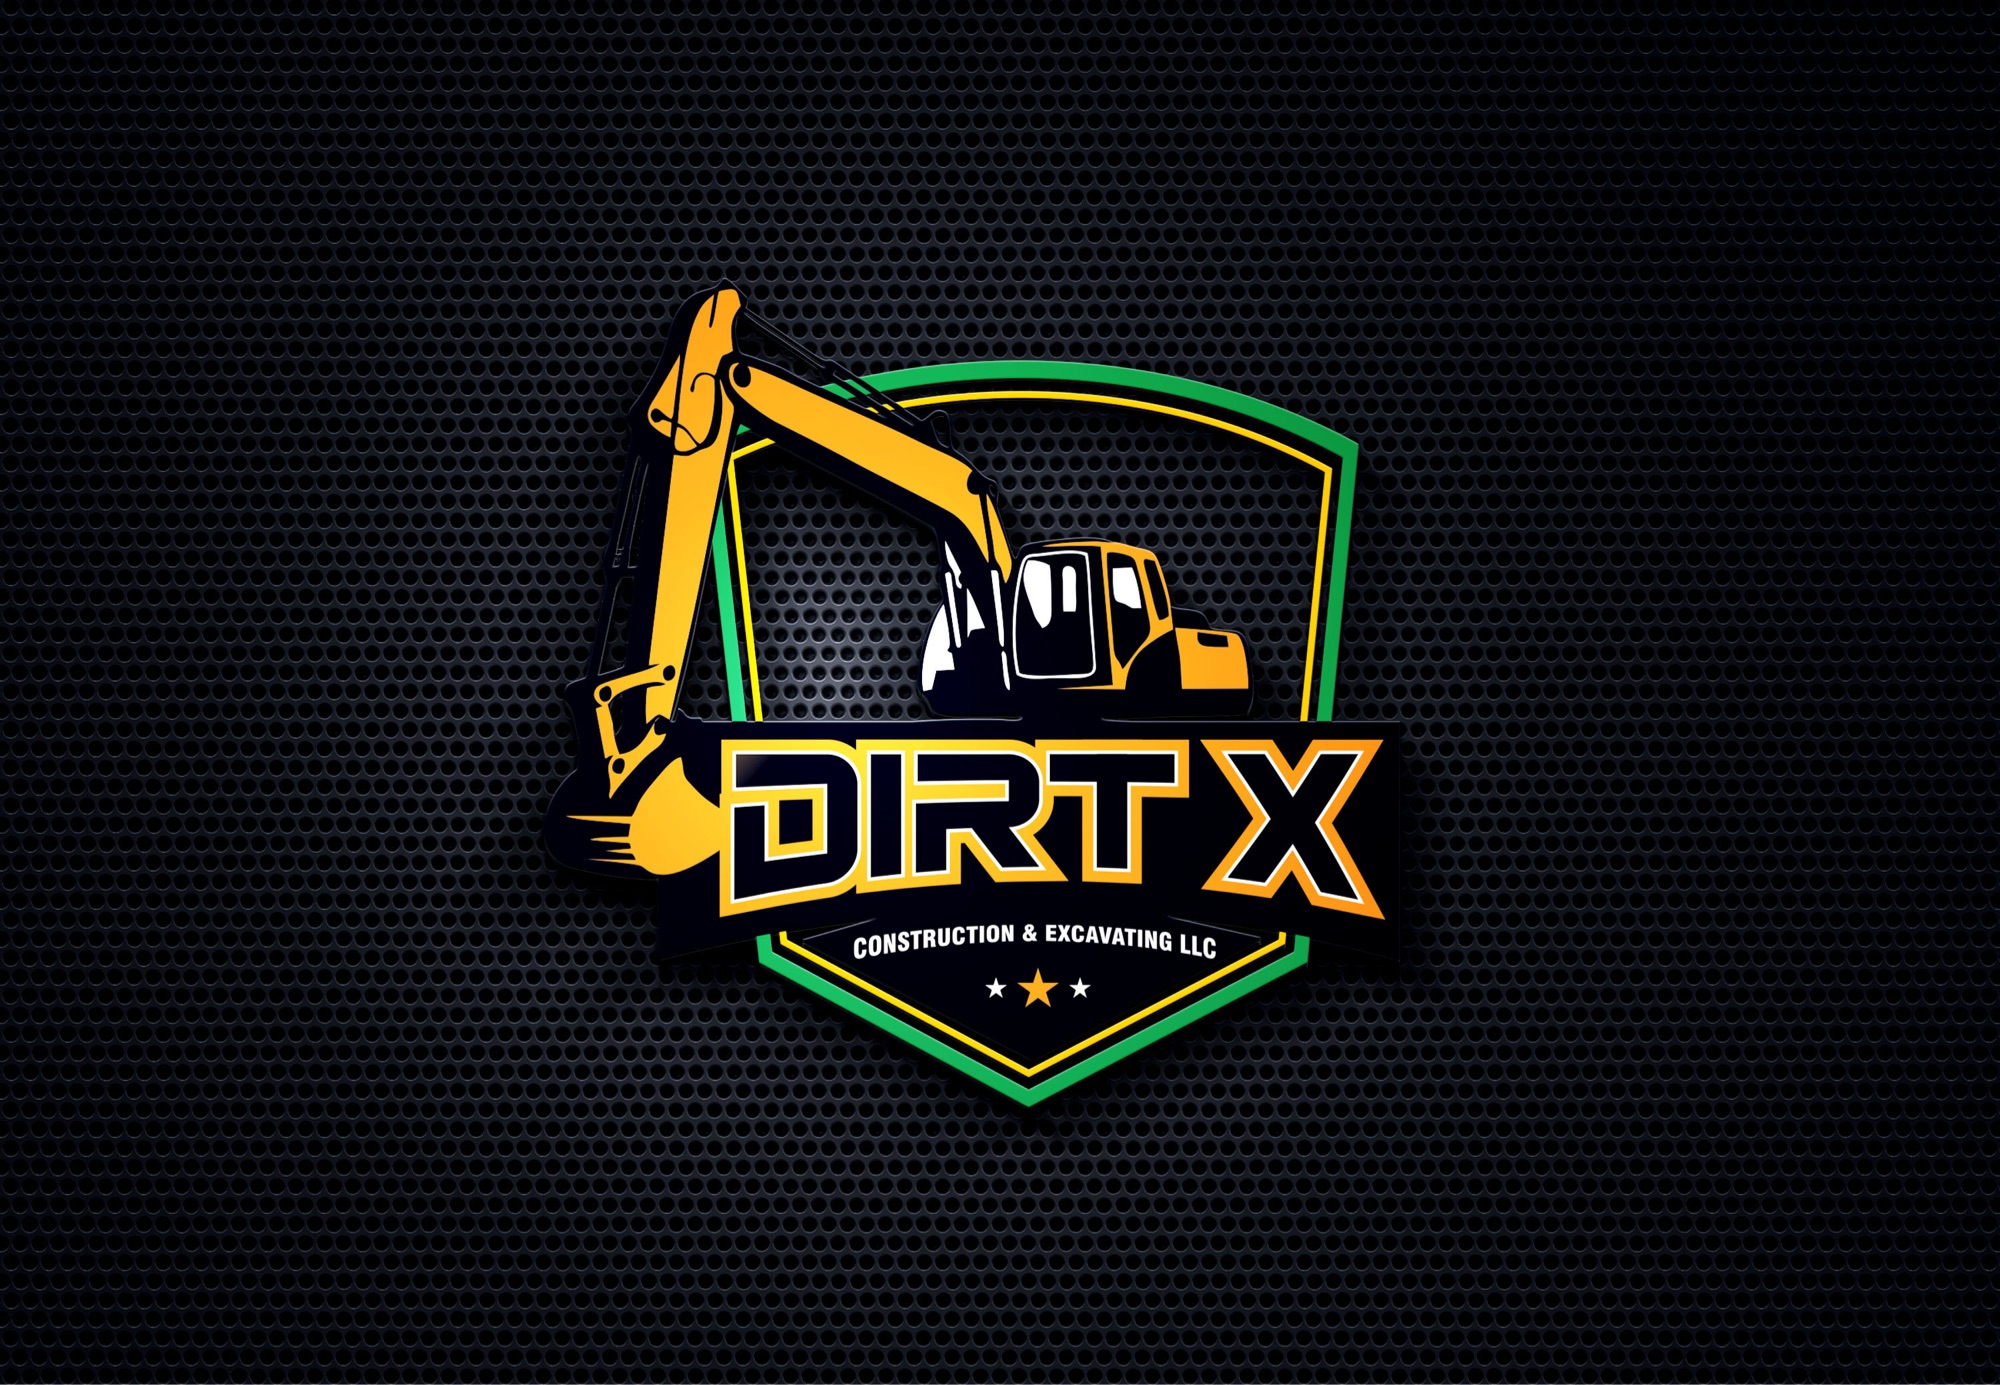 Dirt X Construction & Excavating, LLC Logo